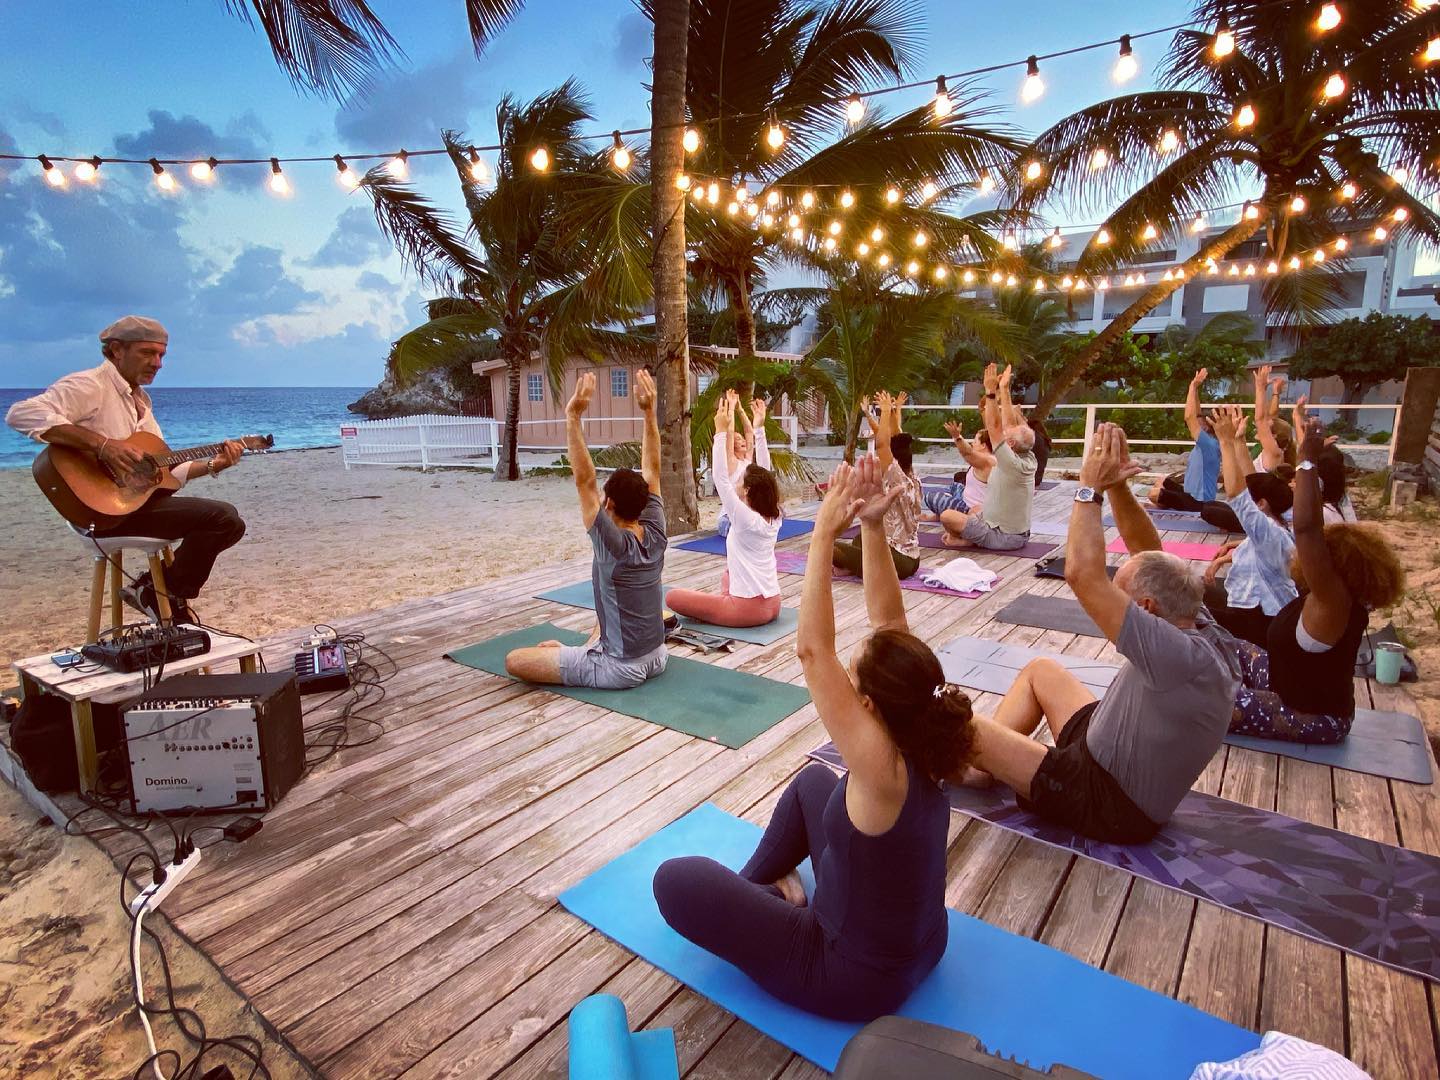 St. Maarten/St. Martin’s Top Wellness Retreats and Yoga Experiences